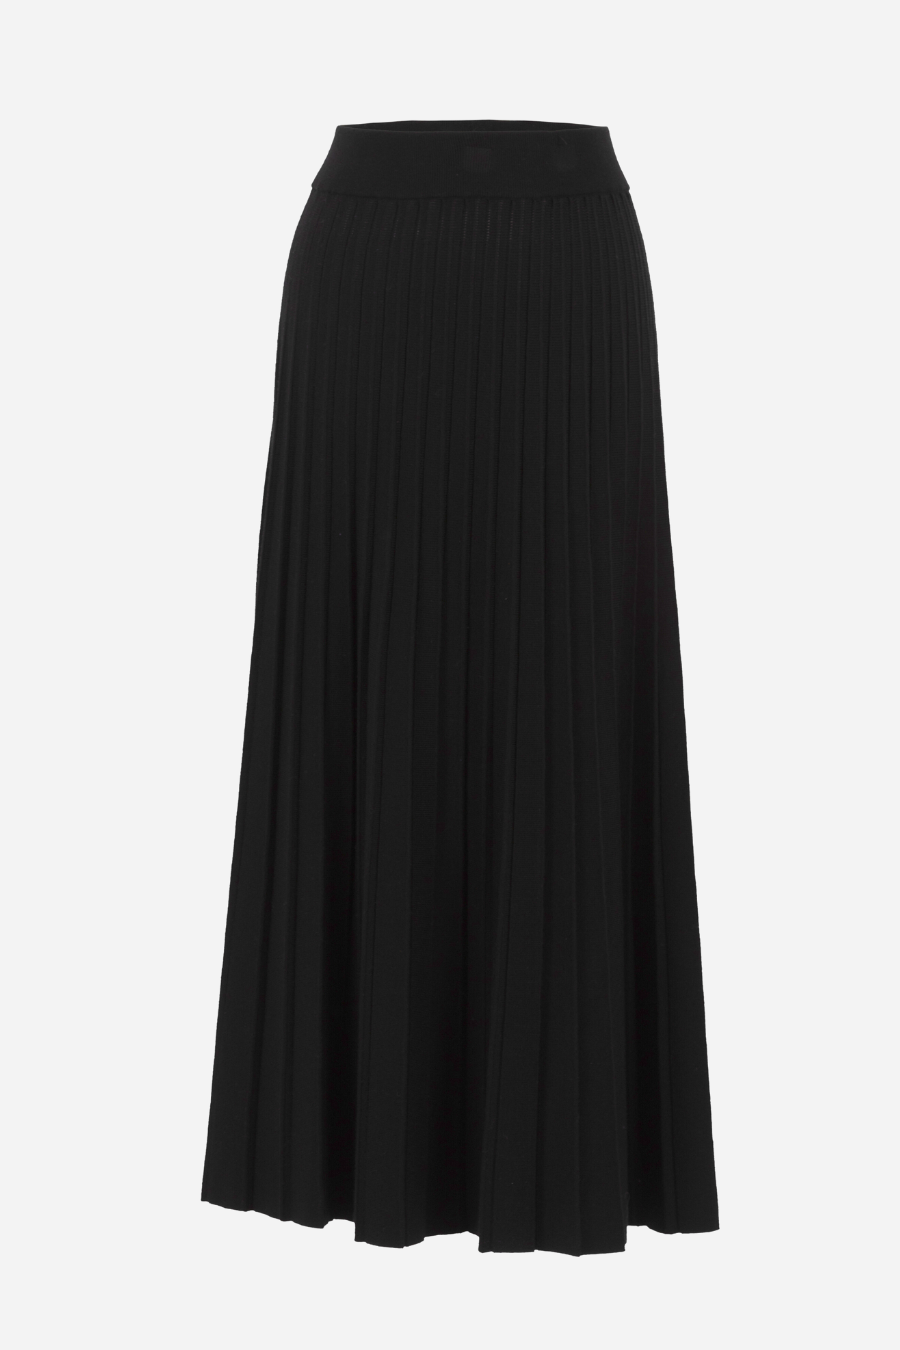 A-line Pleated Black Skirt